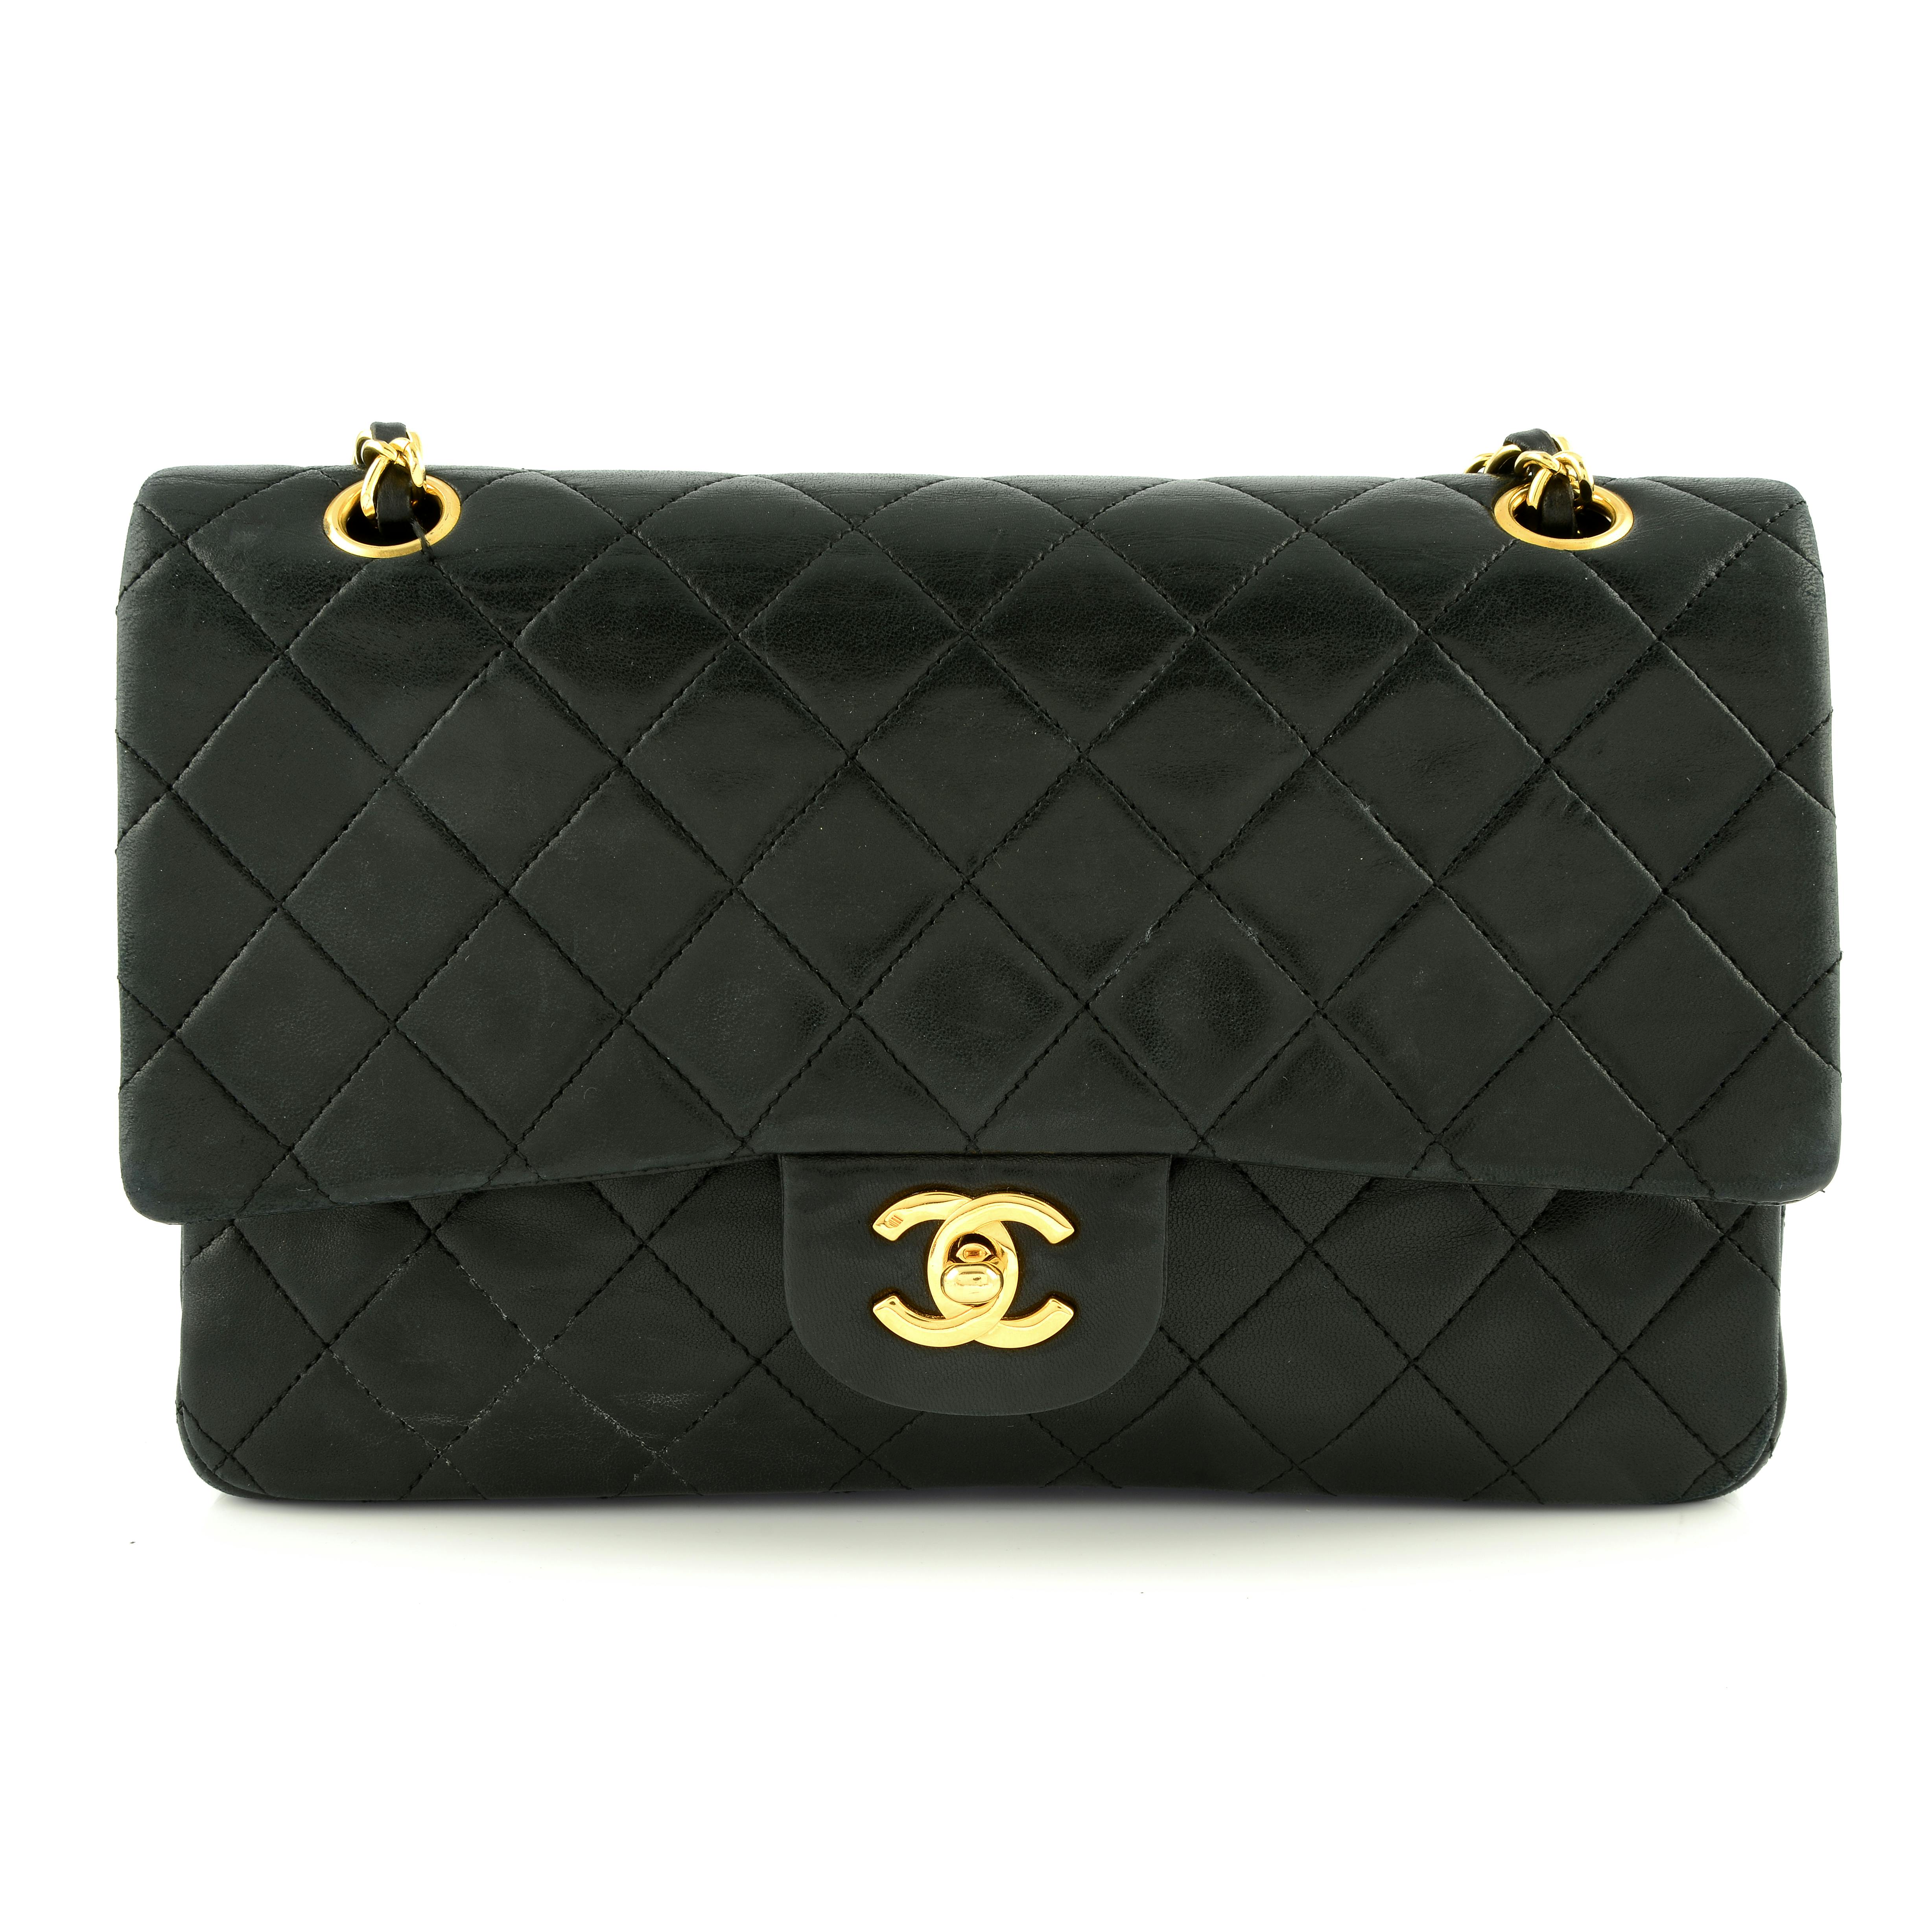 How to Spot Fake Designer Bags: Chanel, Louis Vuitton, Hermés, More